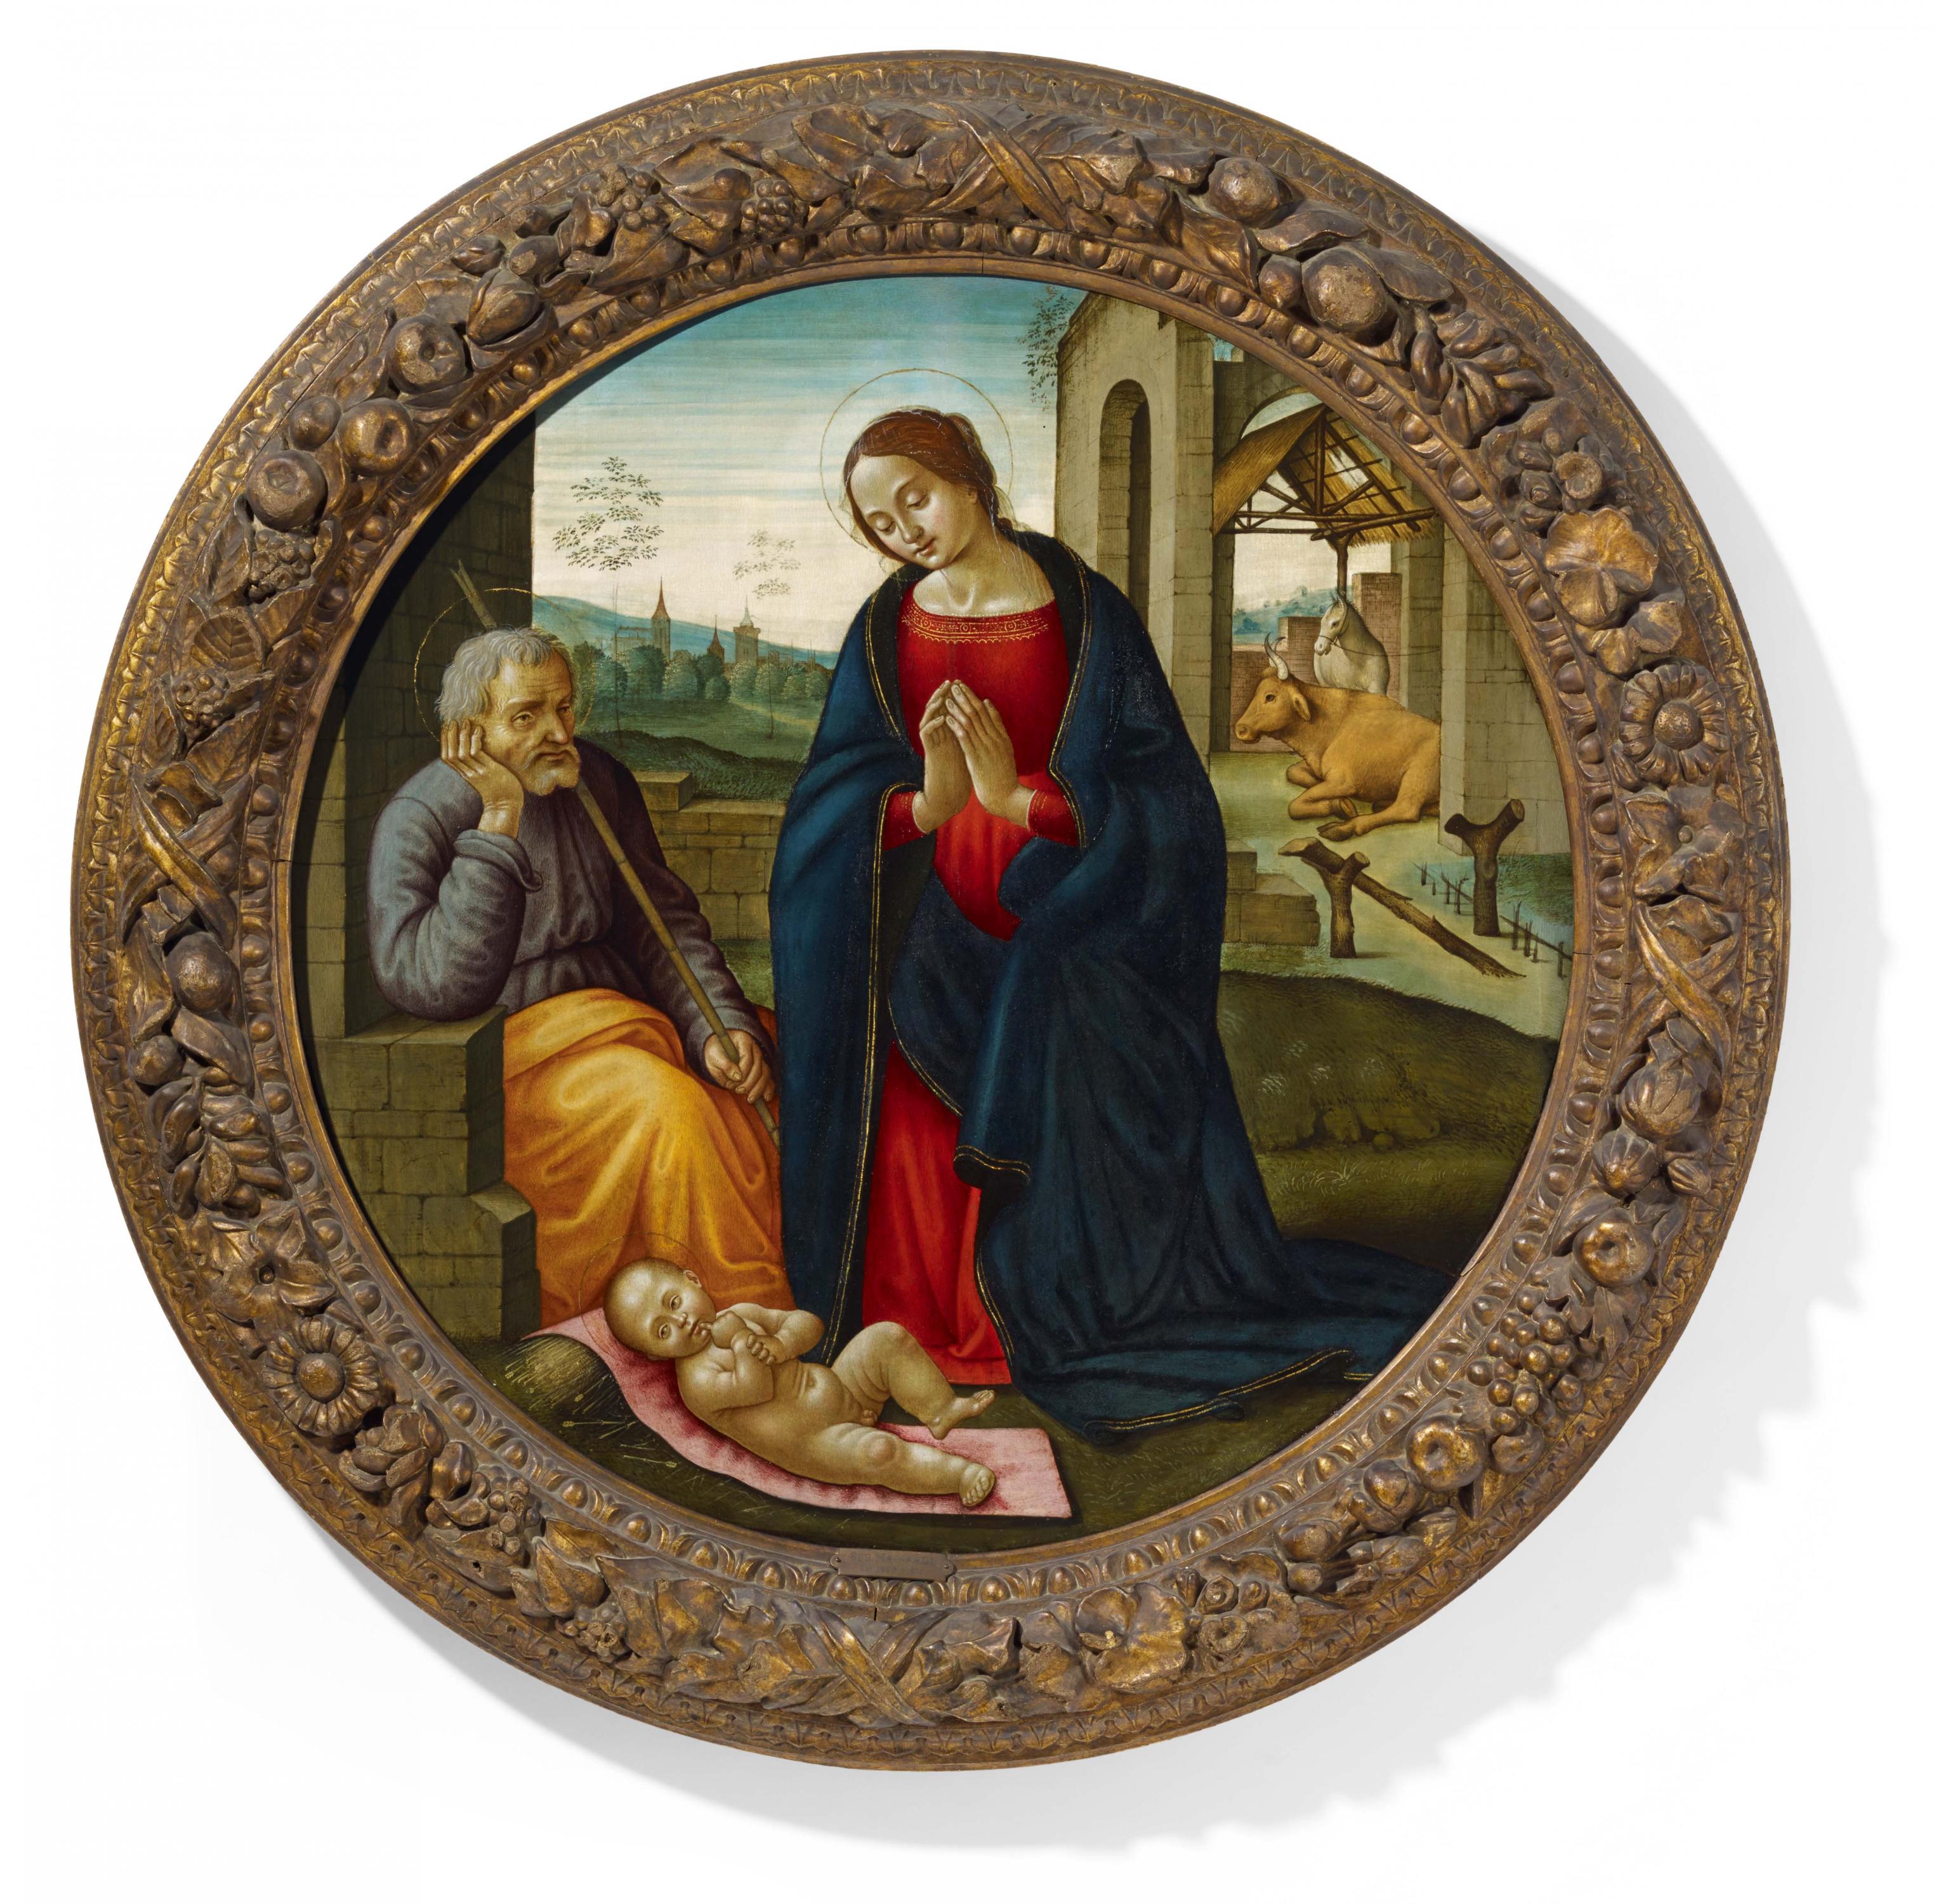 Mainardi, Sebastianoum 1460 San Gimignano - 1513 Florenz - zugeschriebenAnbetung des Kindes. Öl